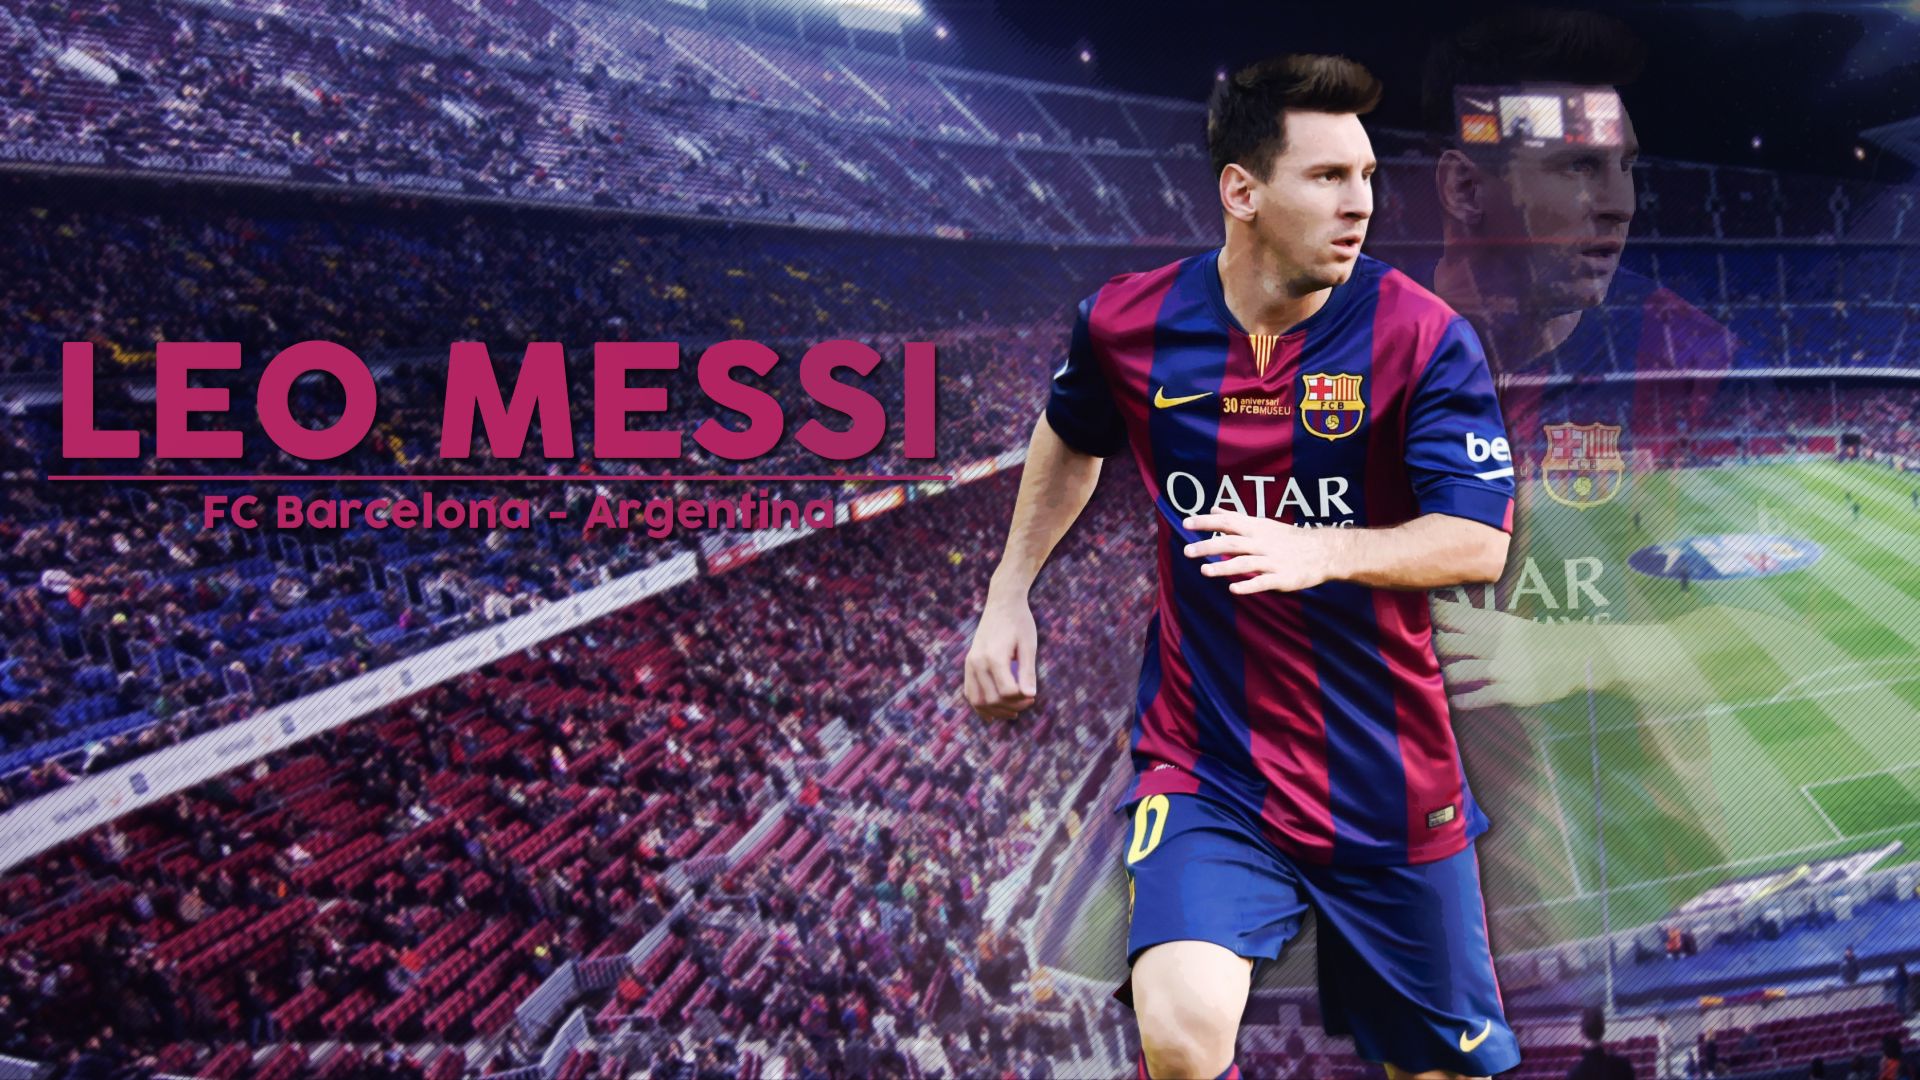 Barcelona Messi Wallpaper Full Hd - Epic Wallpaperz